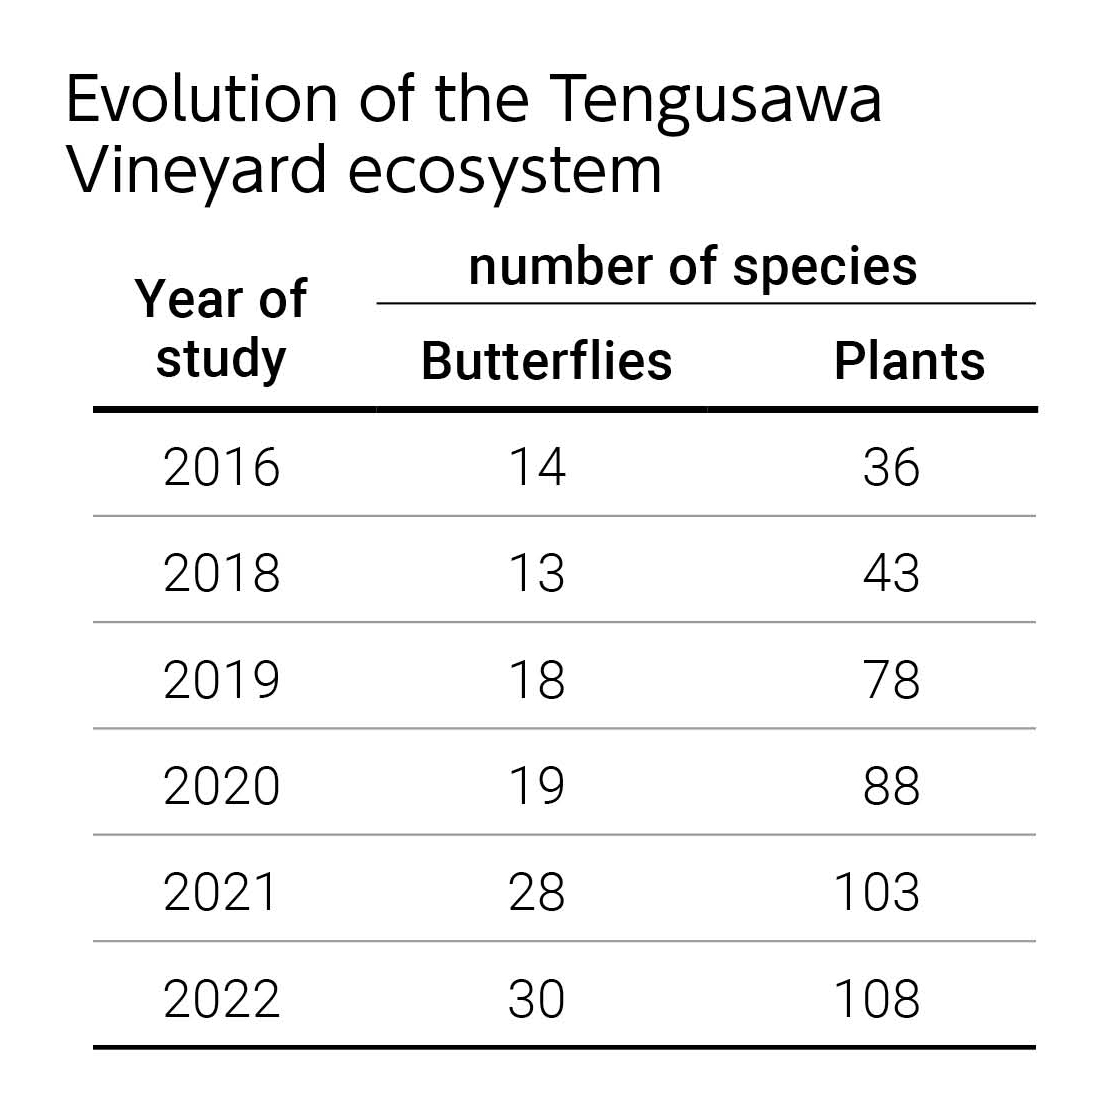 Figure: Evolution of the Tengusawa Vineyard ecosystem